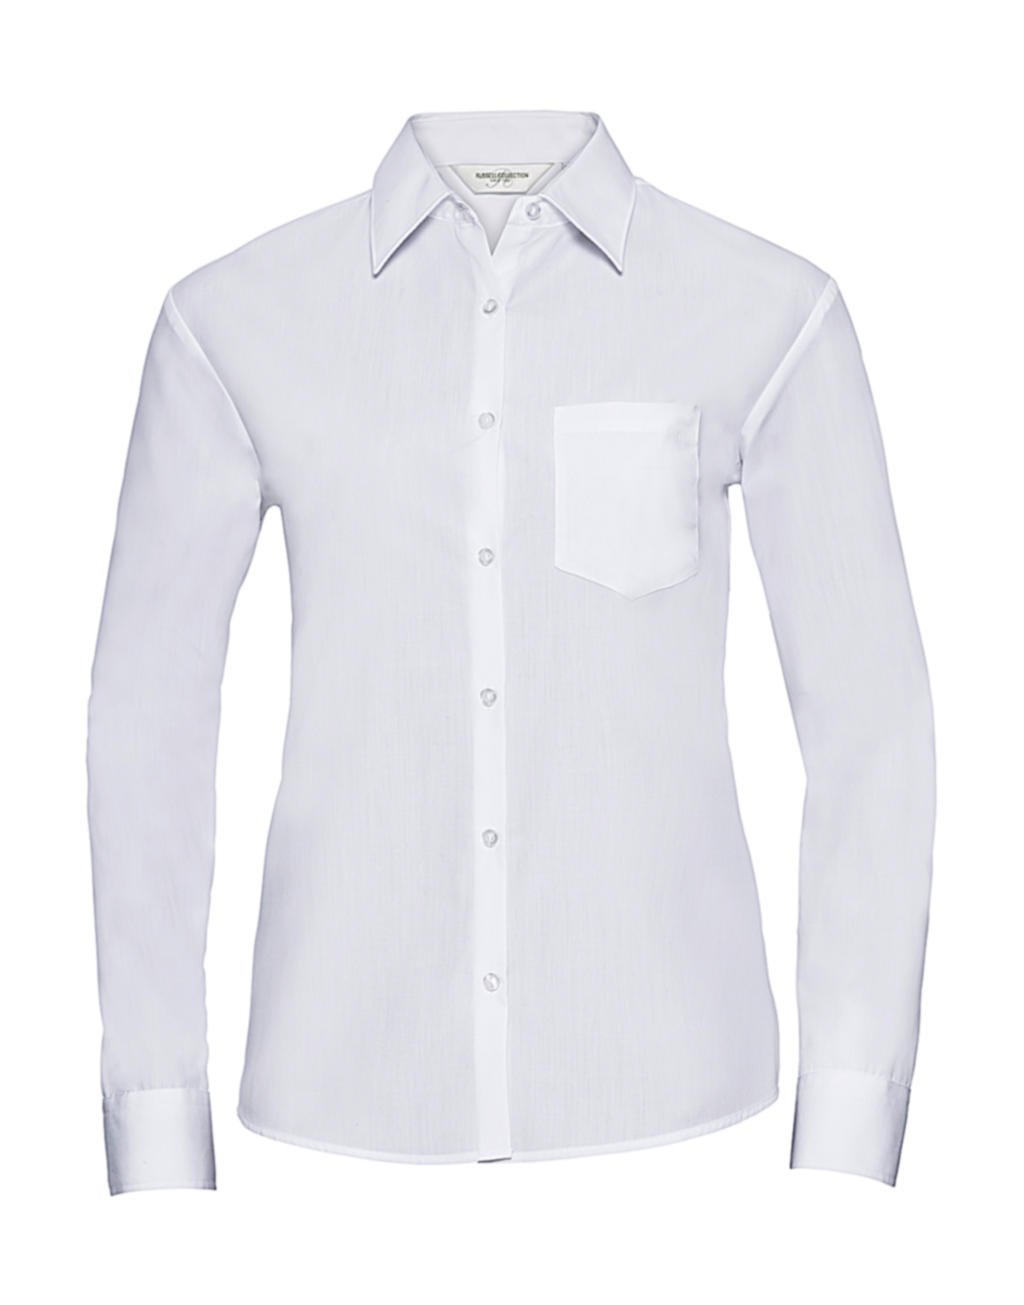  Ladies LS Poplin Shirt in Farbe White